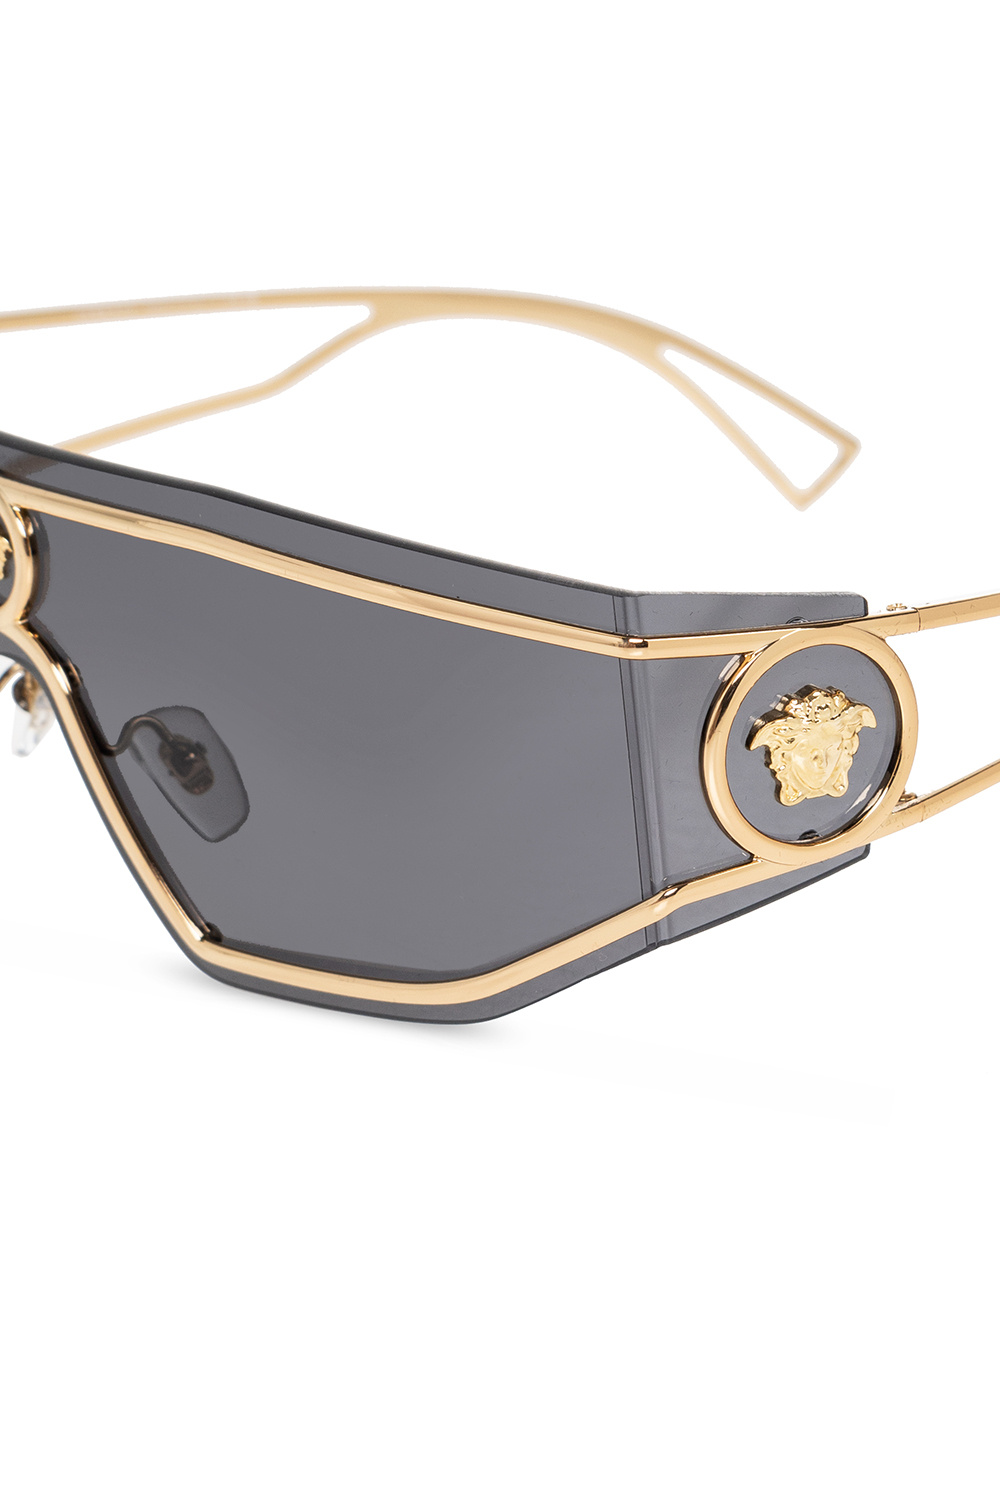 Louis Vuitton My LV Chain Round Sunglasses - Vitkac shop online